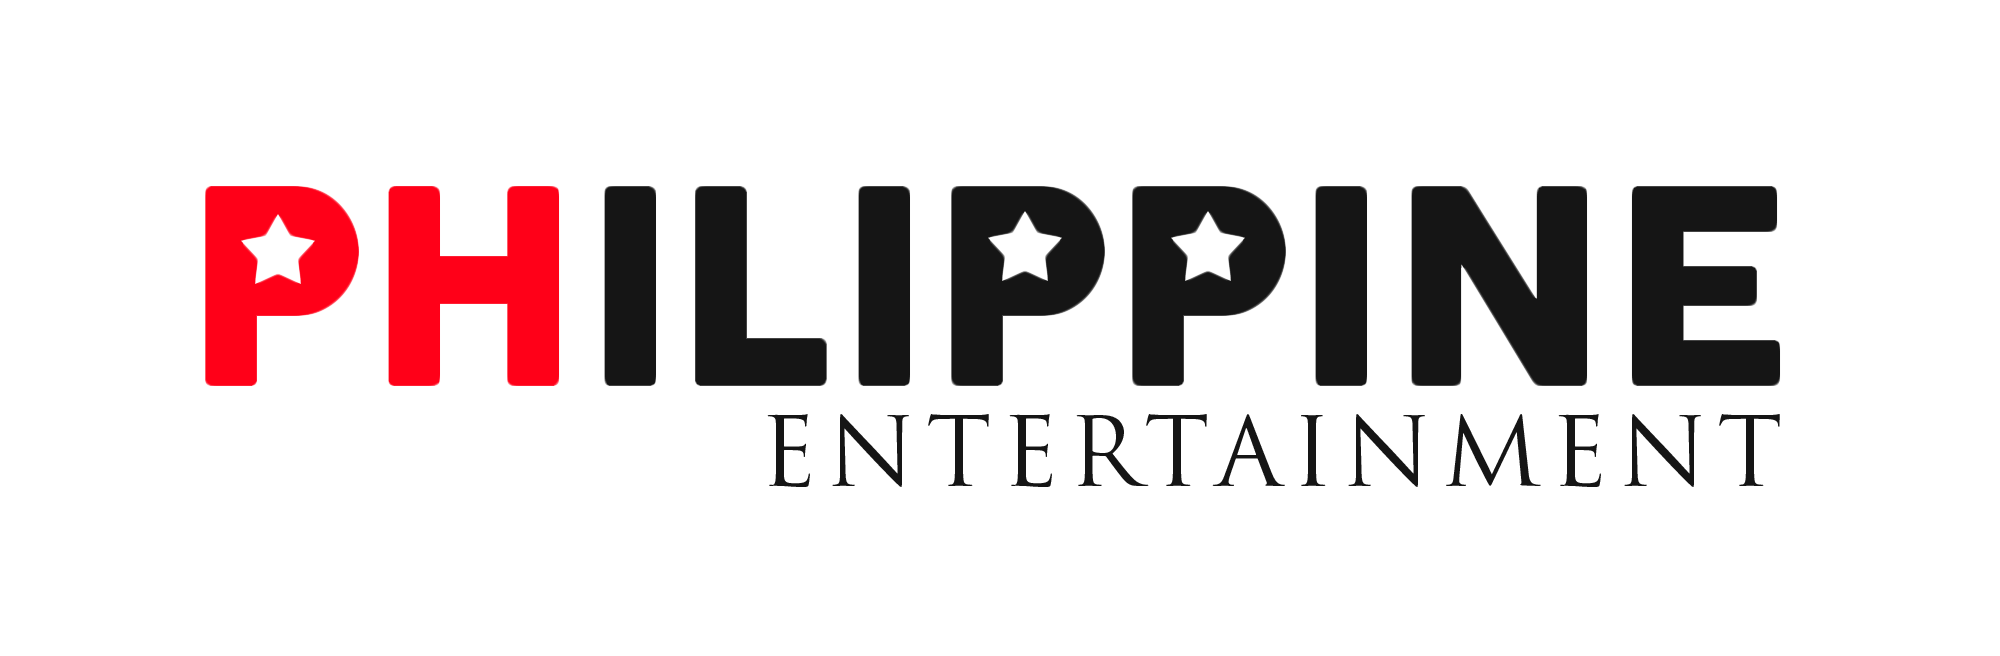 PH Entertainment | Philippine Entertainment